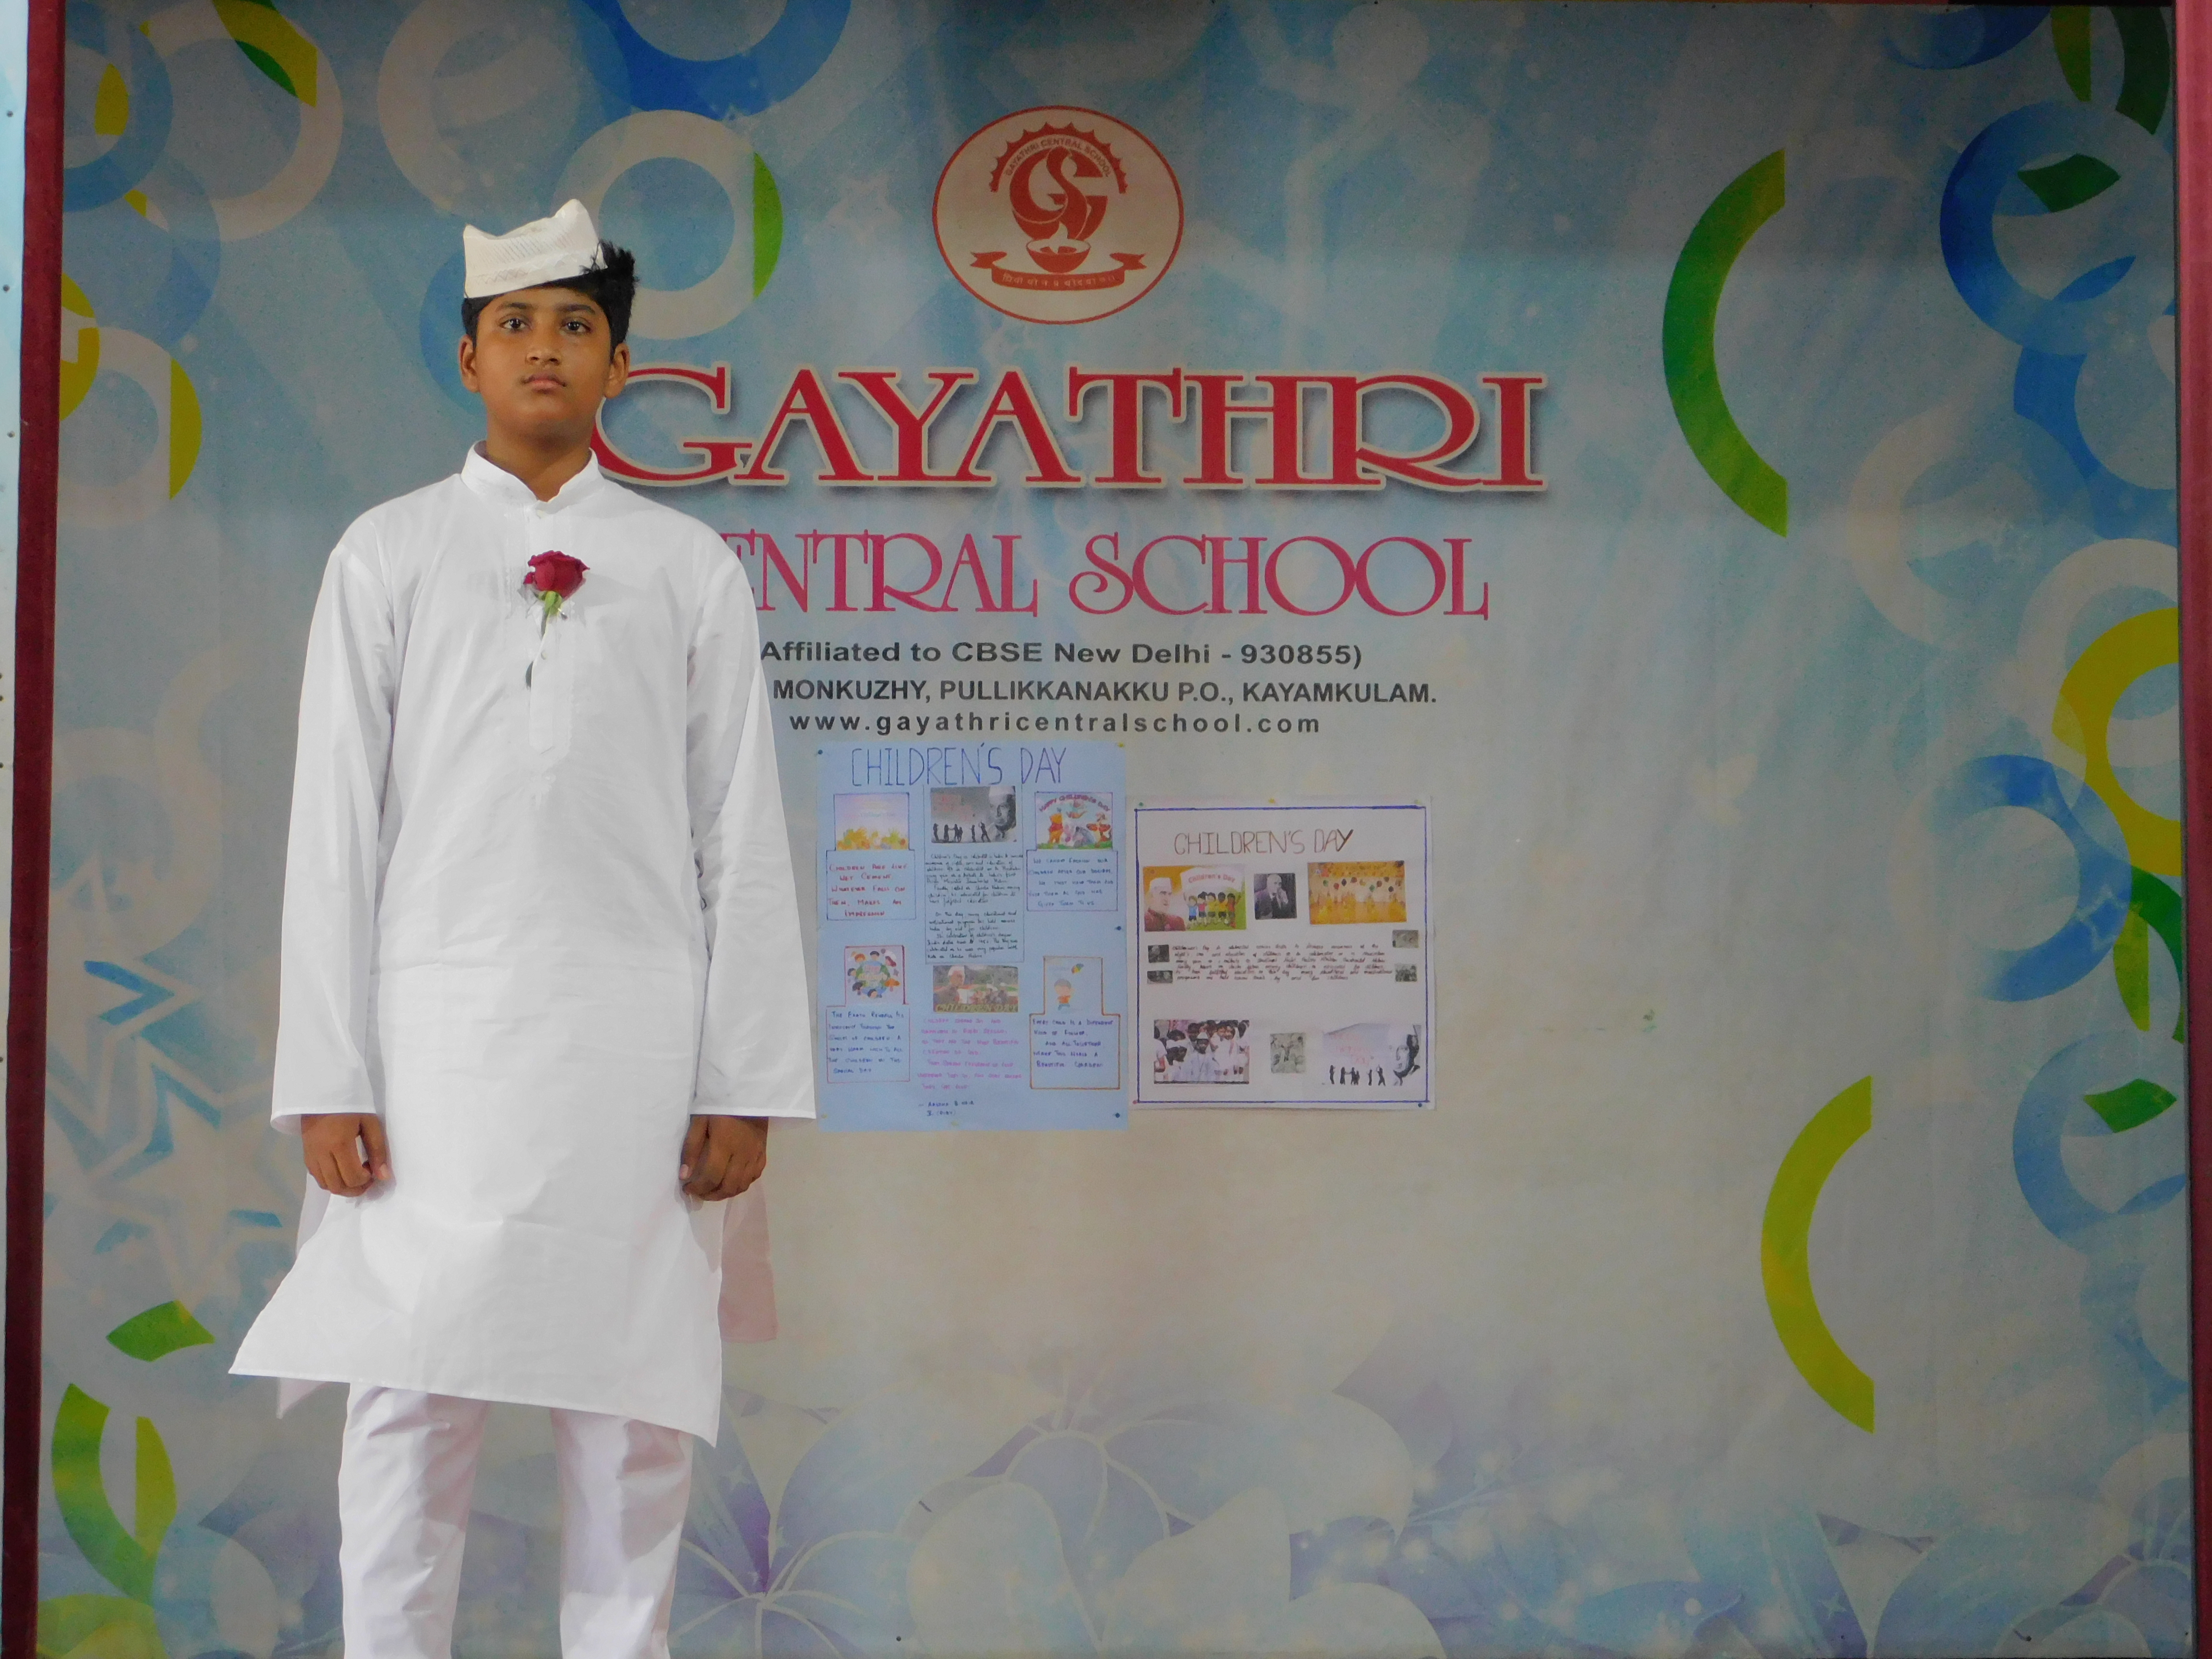 https://www.facebook.com/pg/Gayathri-Central-School-171956266196689/photos/?tab=album&album_id=2607557999303158